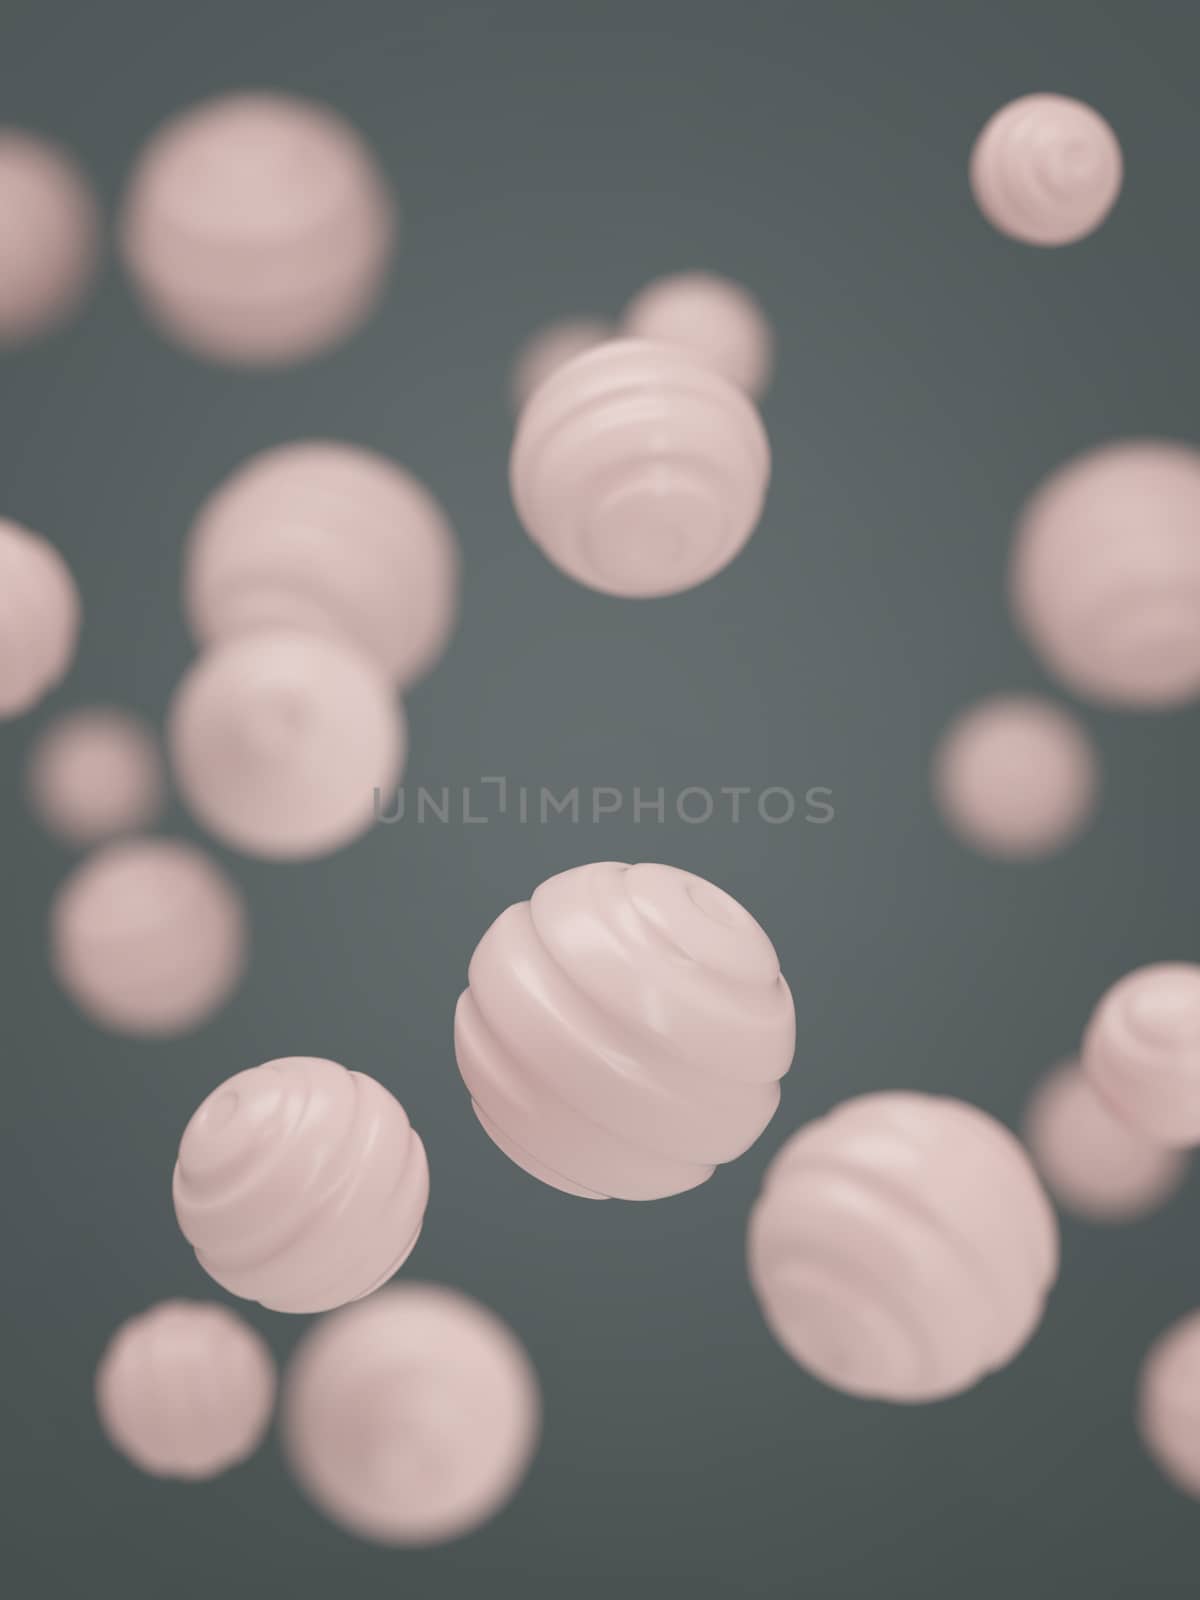 Pastel color candy background rose quartz 3d rendering